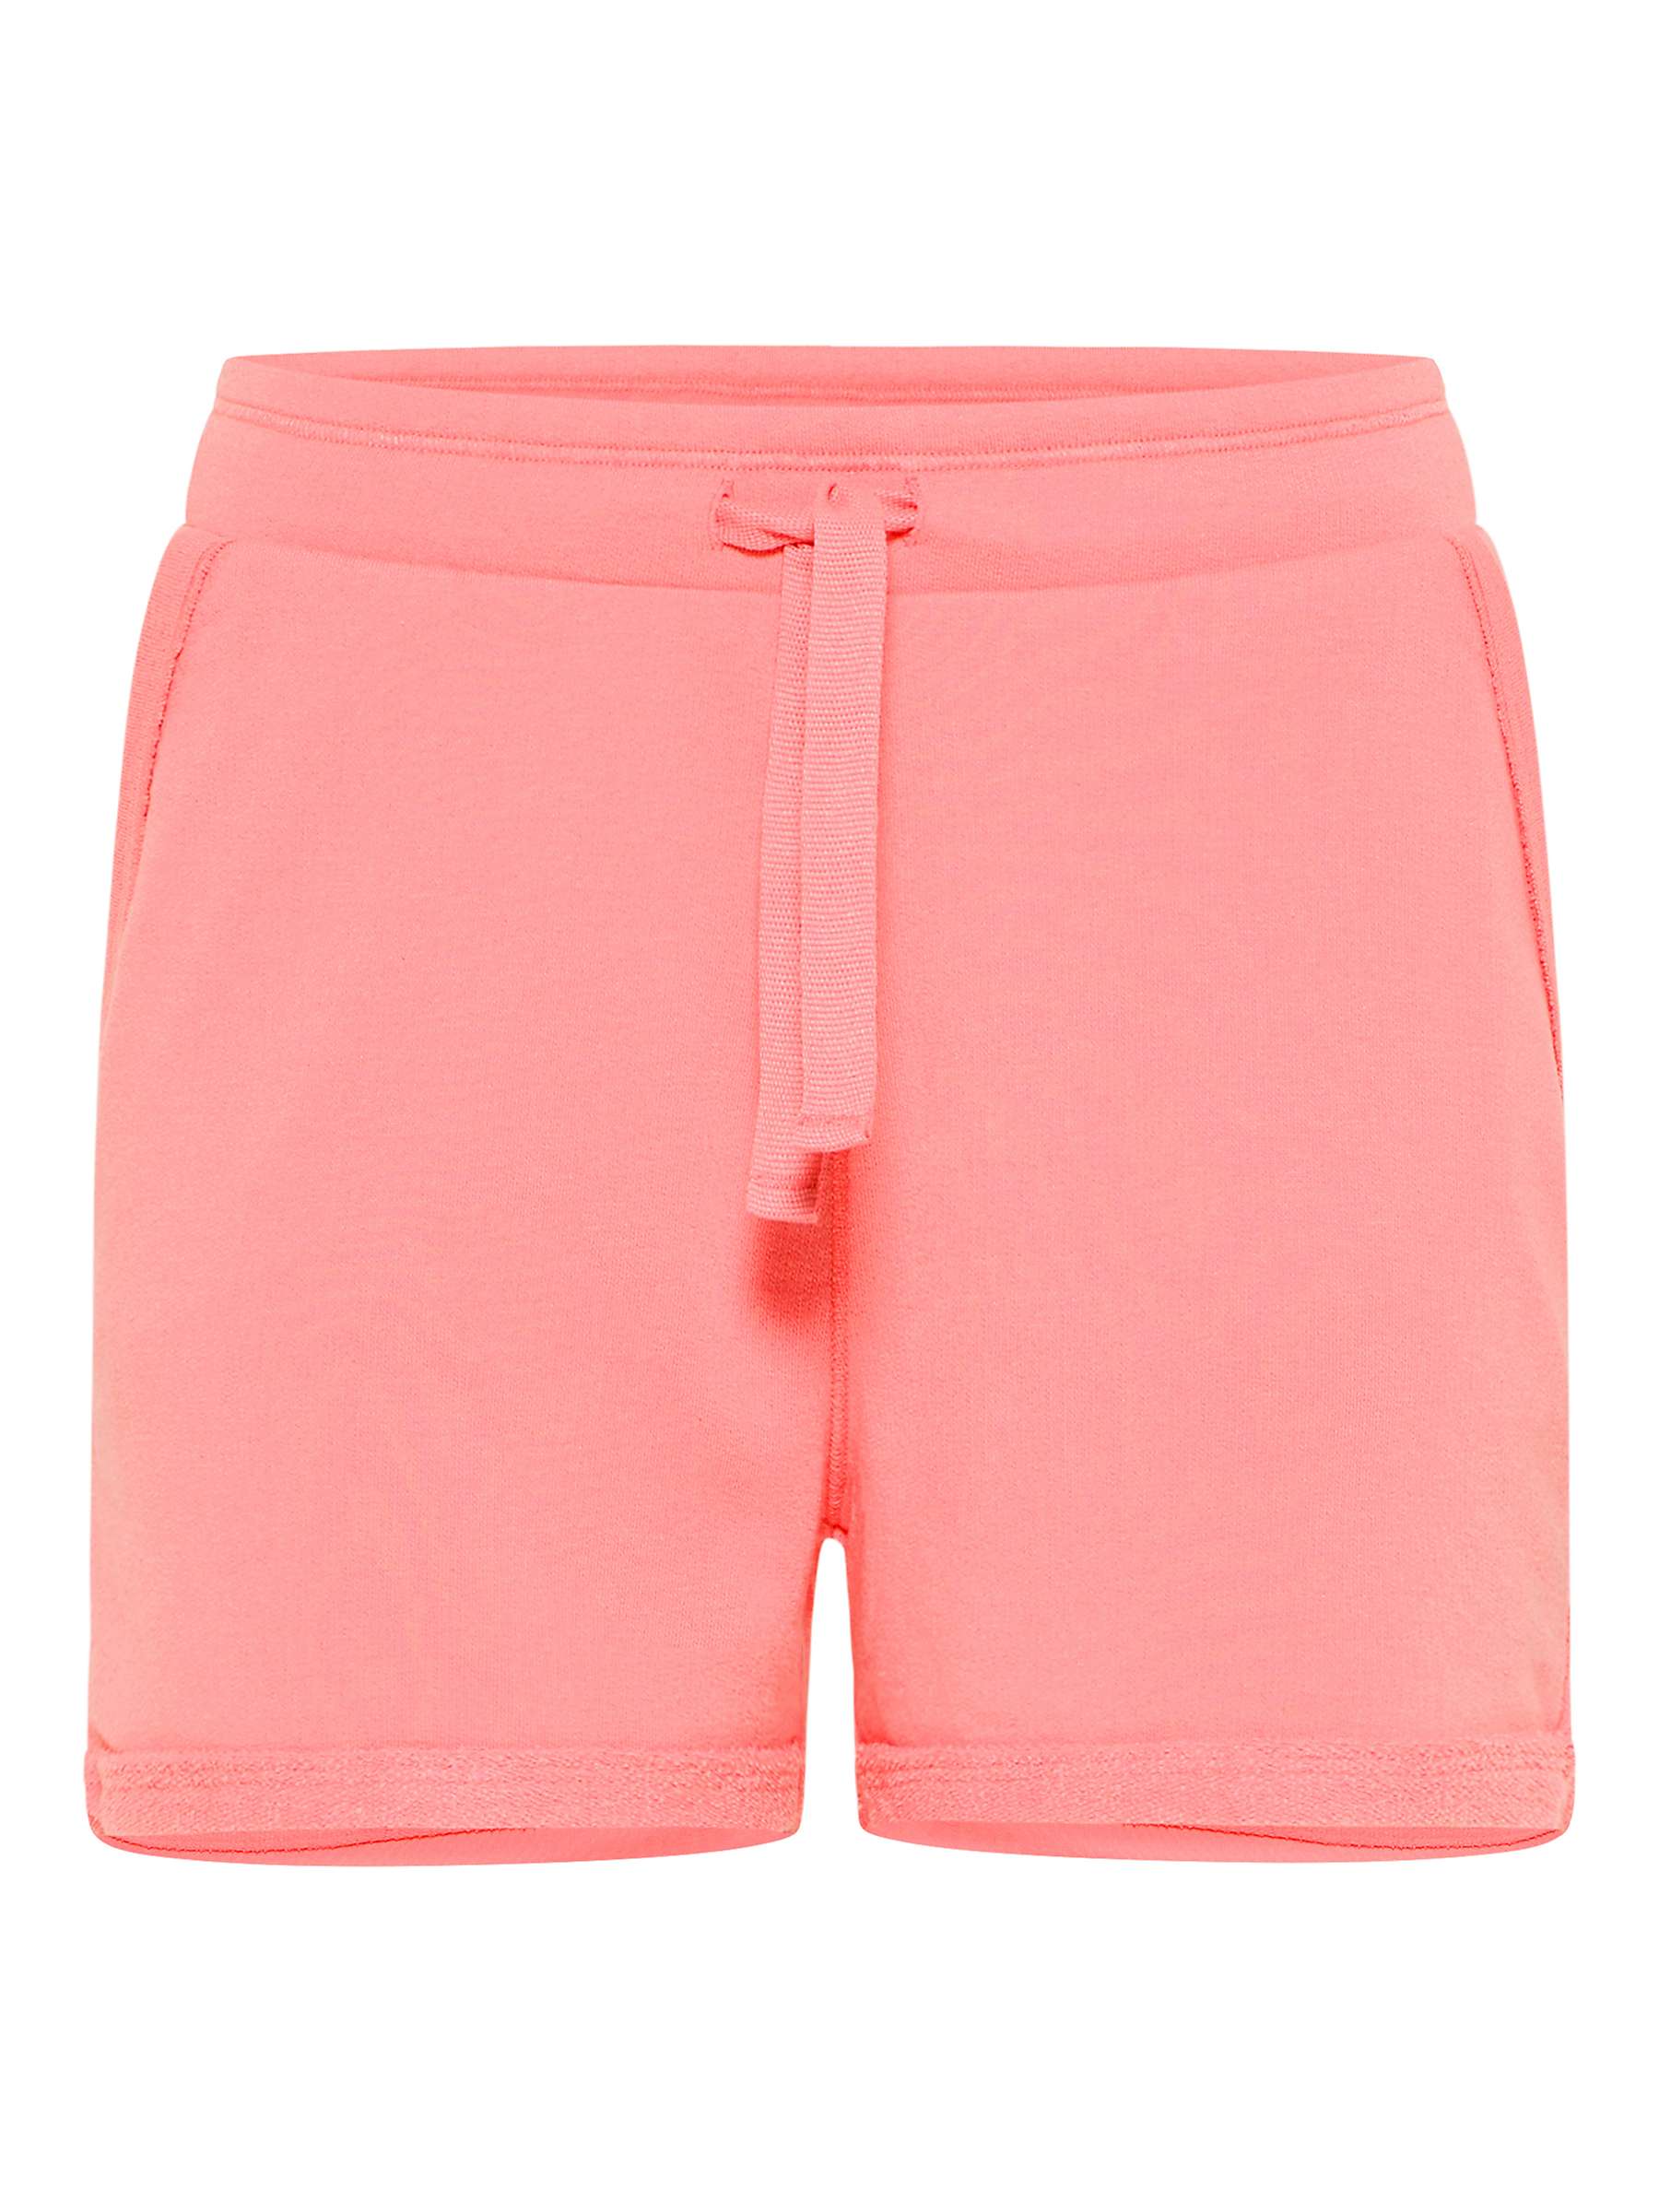 Buy Venice Beach Ammy Shorts, Sunset Peach Online at johnlewis.com